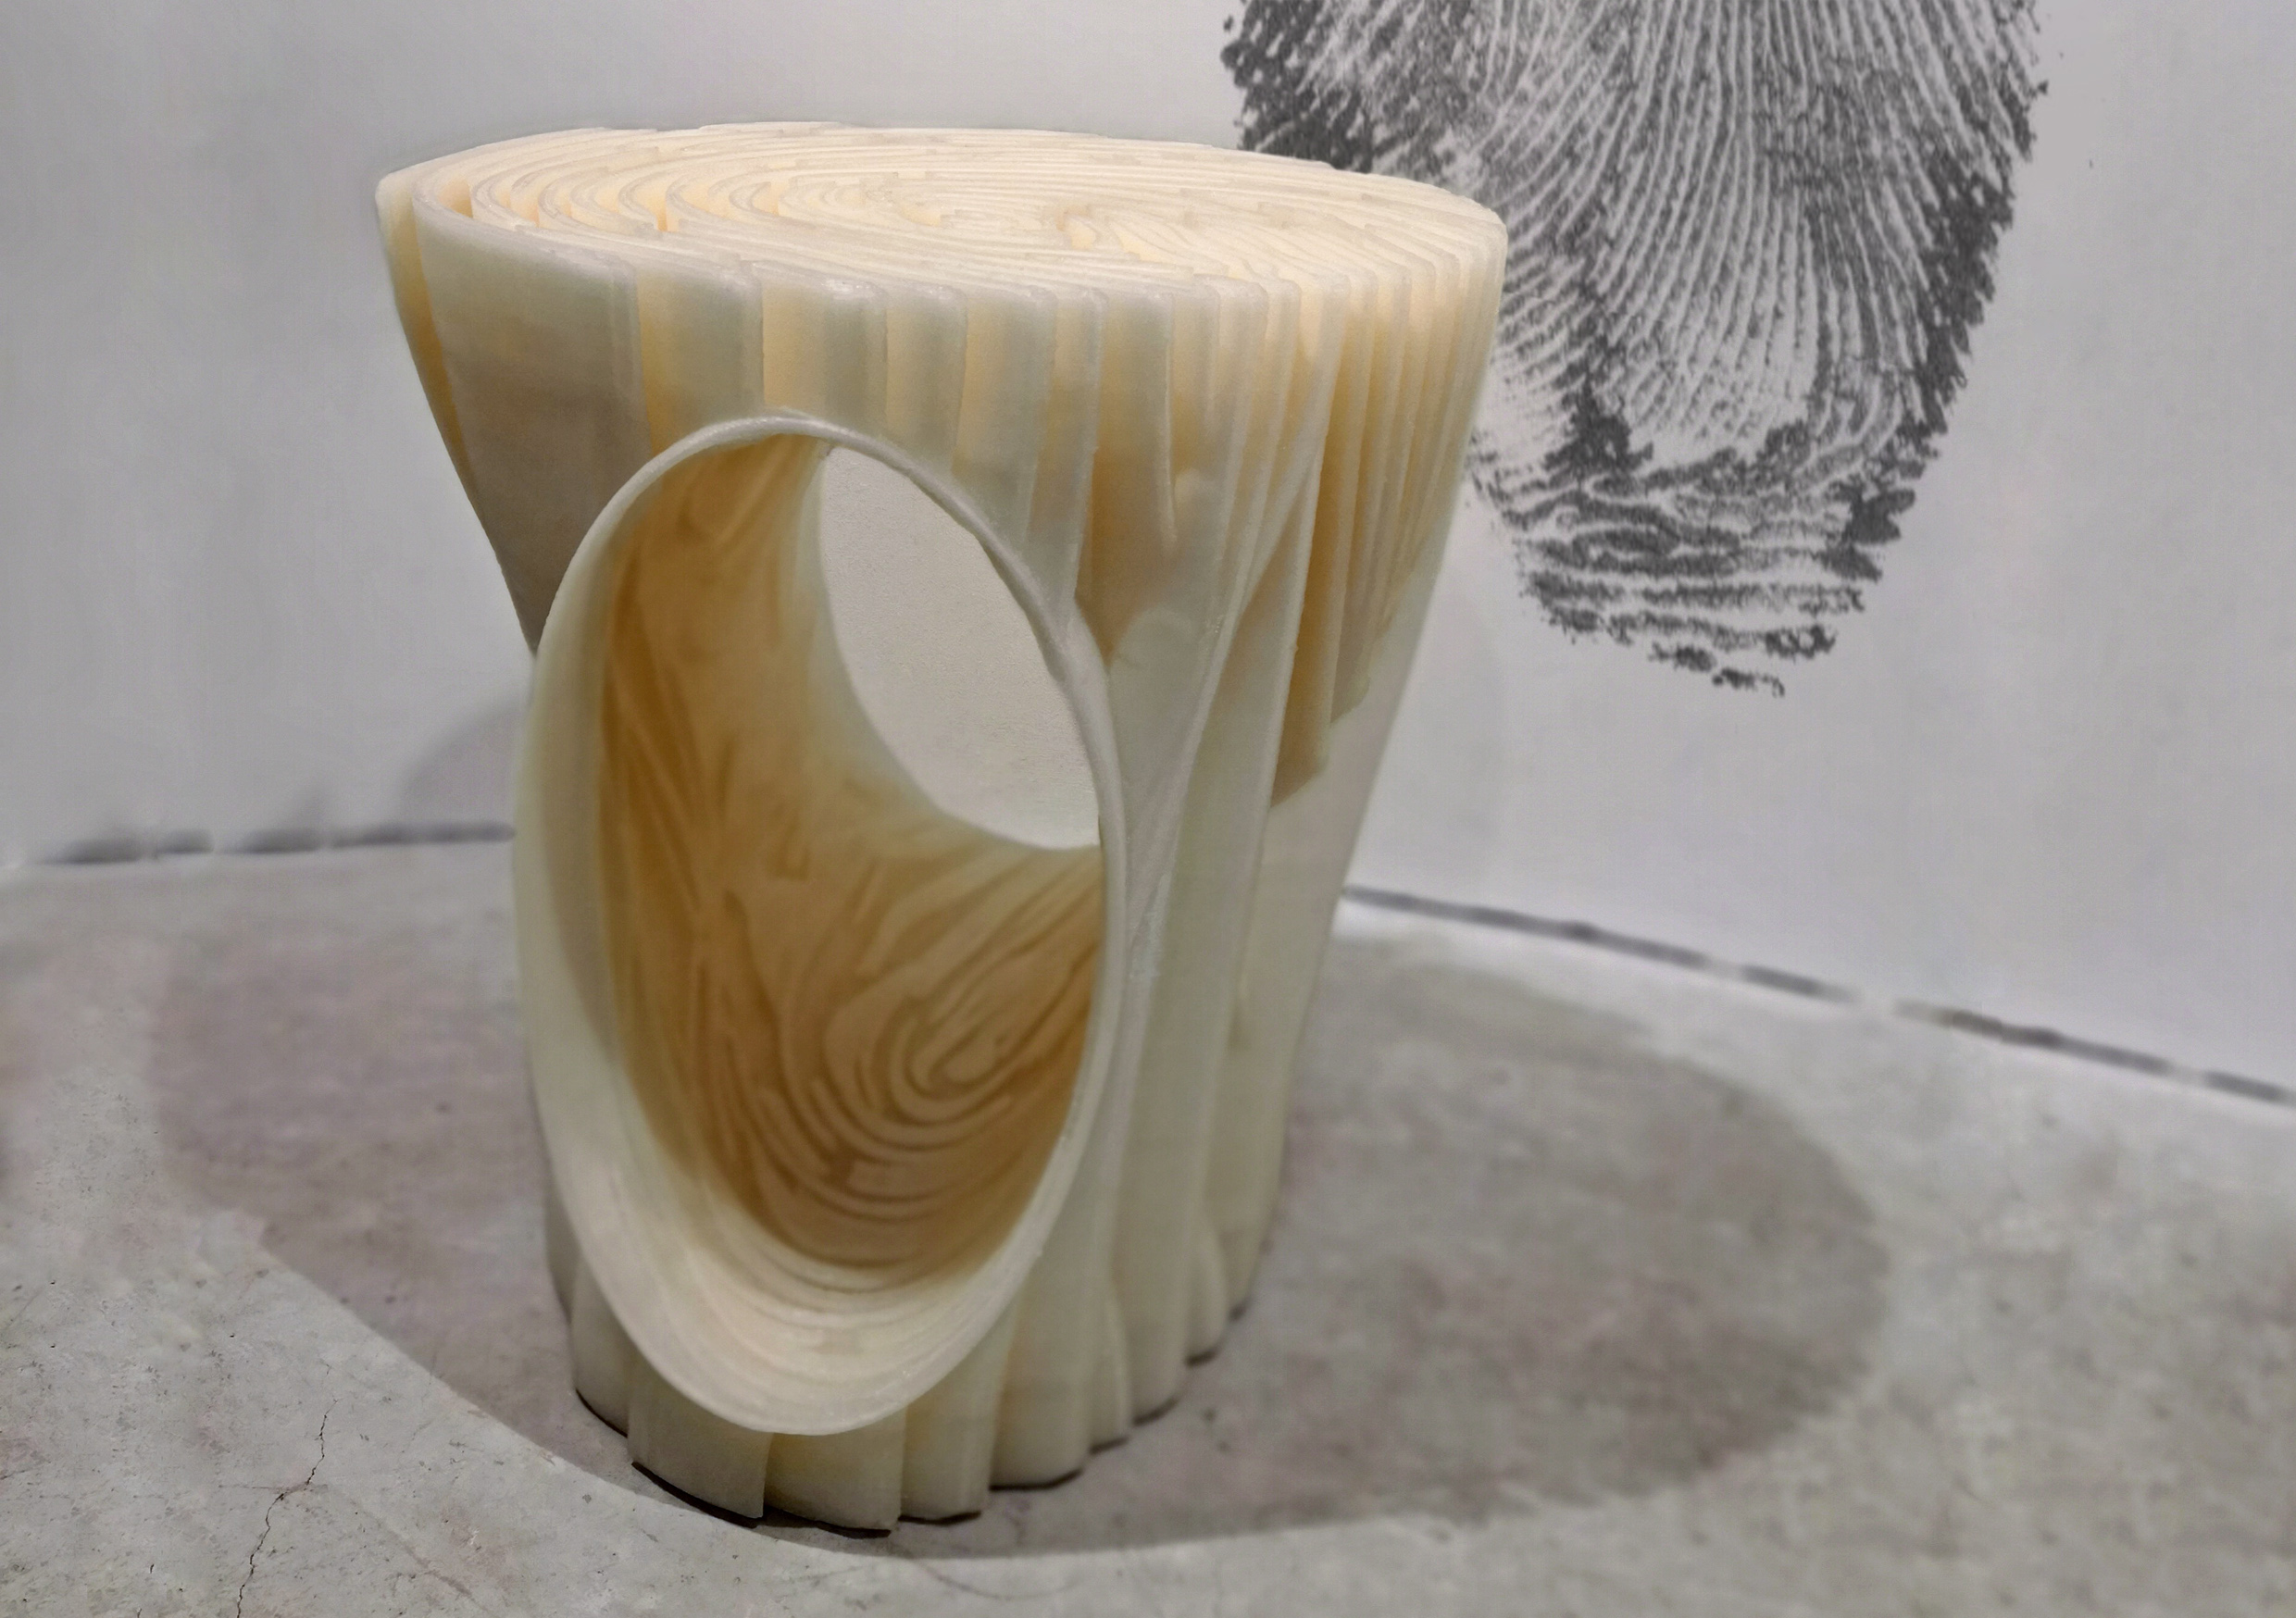 The 3D printed fingerprint stool. Photo via BigRep.